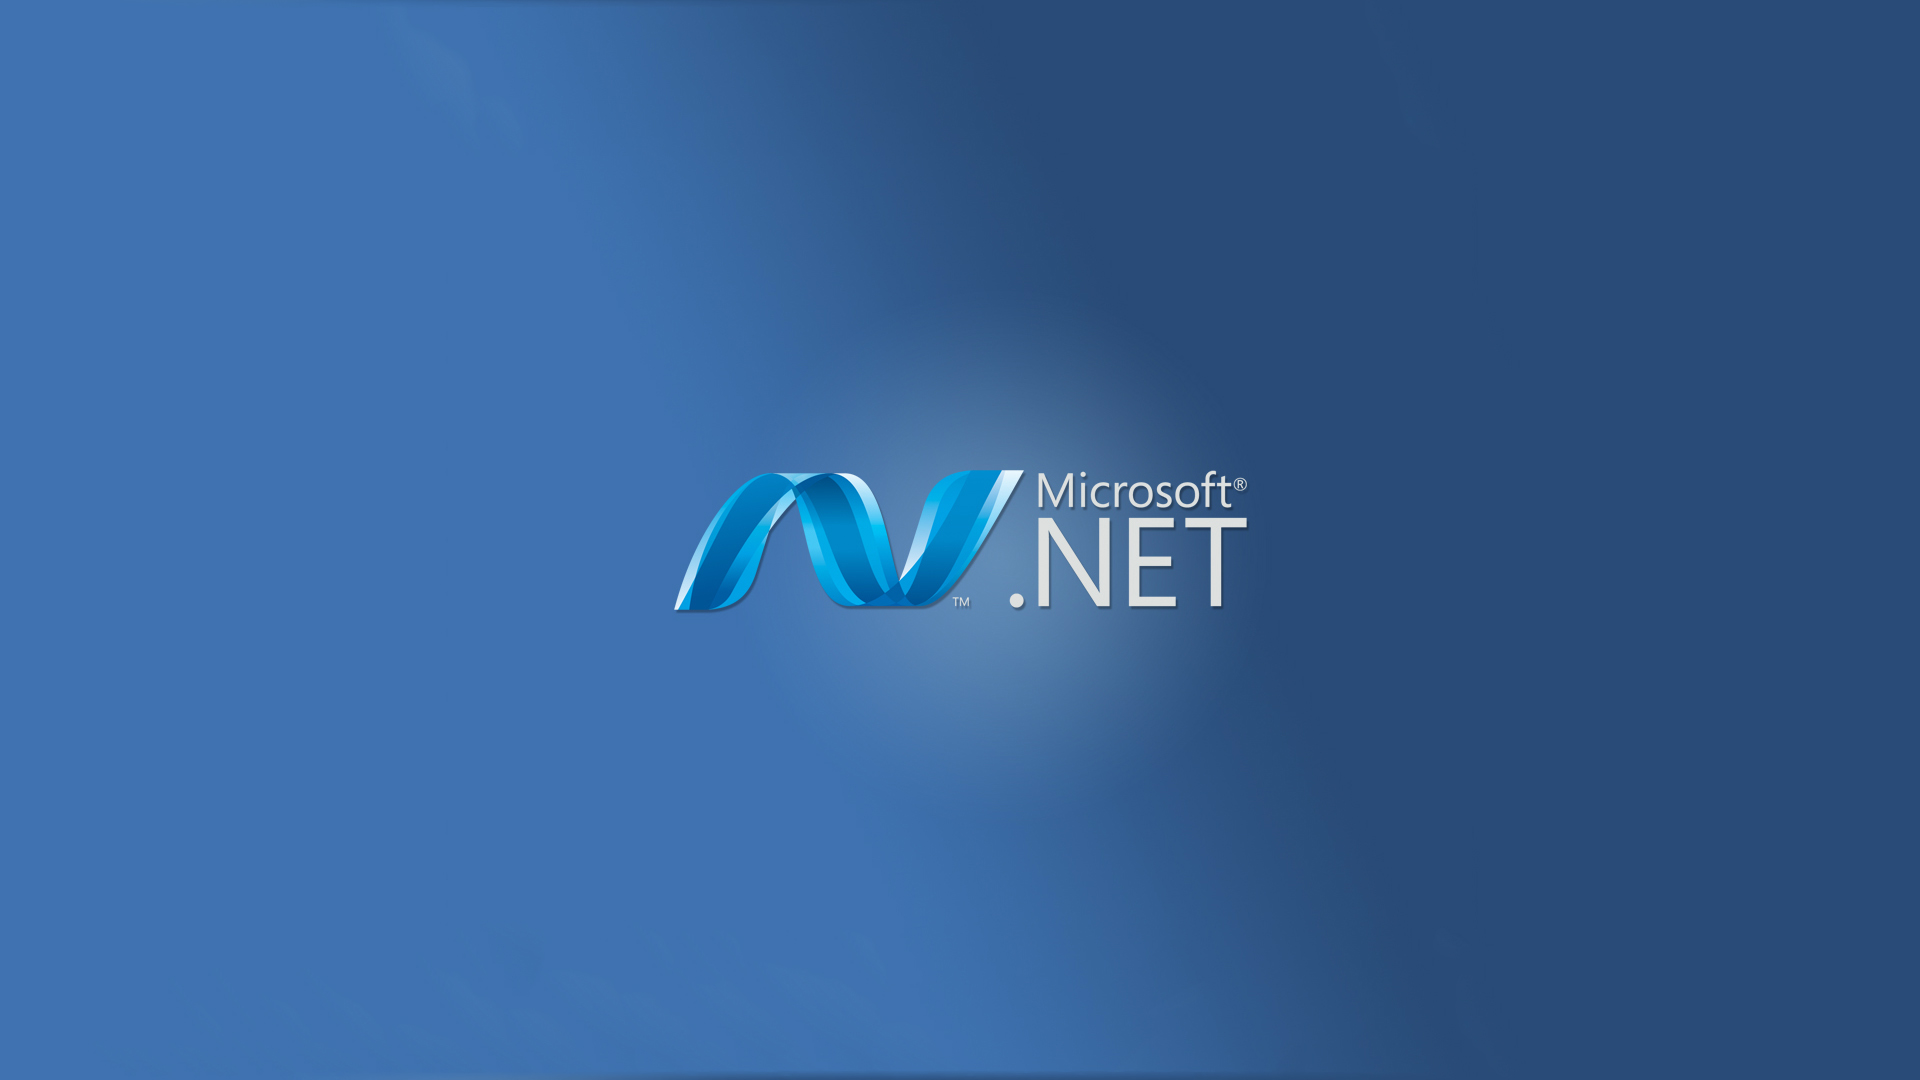 Microsoft .Net Framework Logo photo - 1